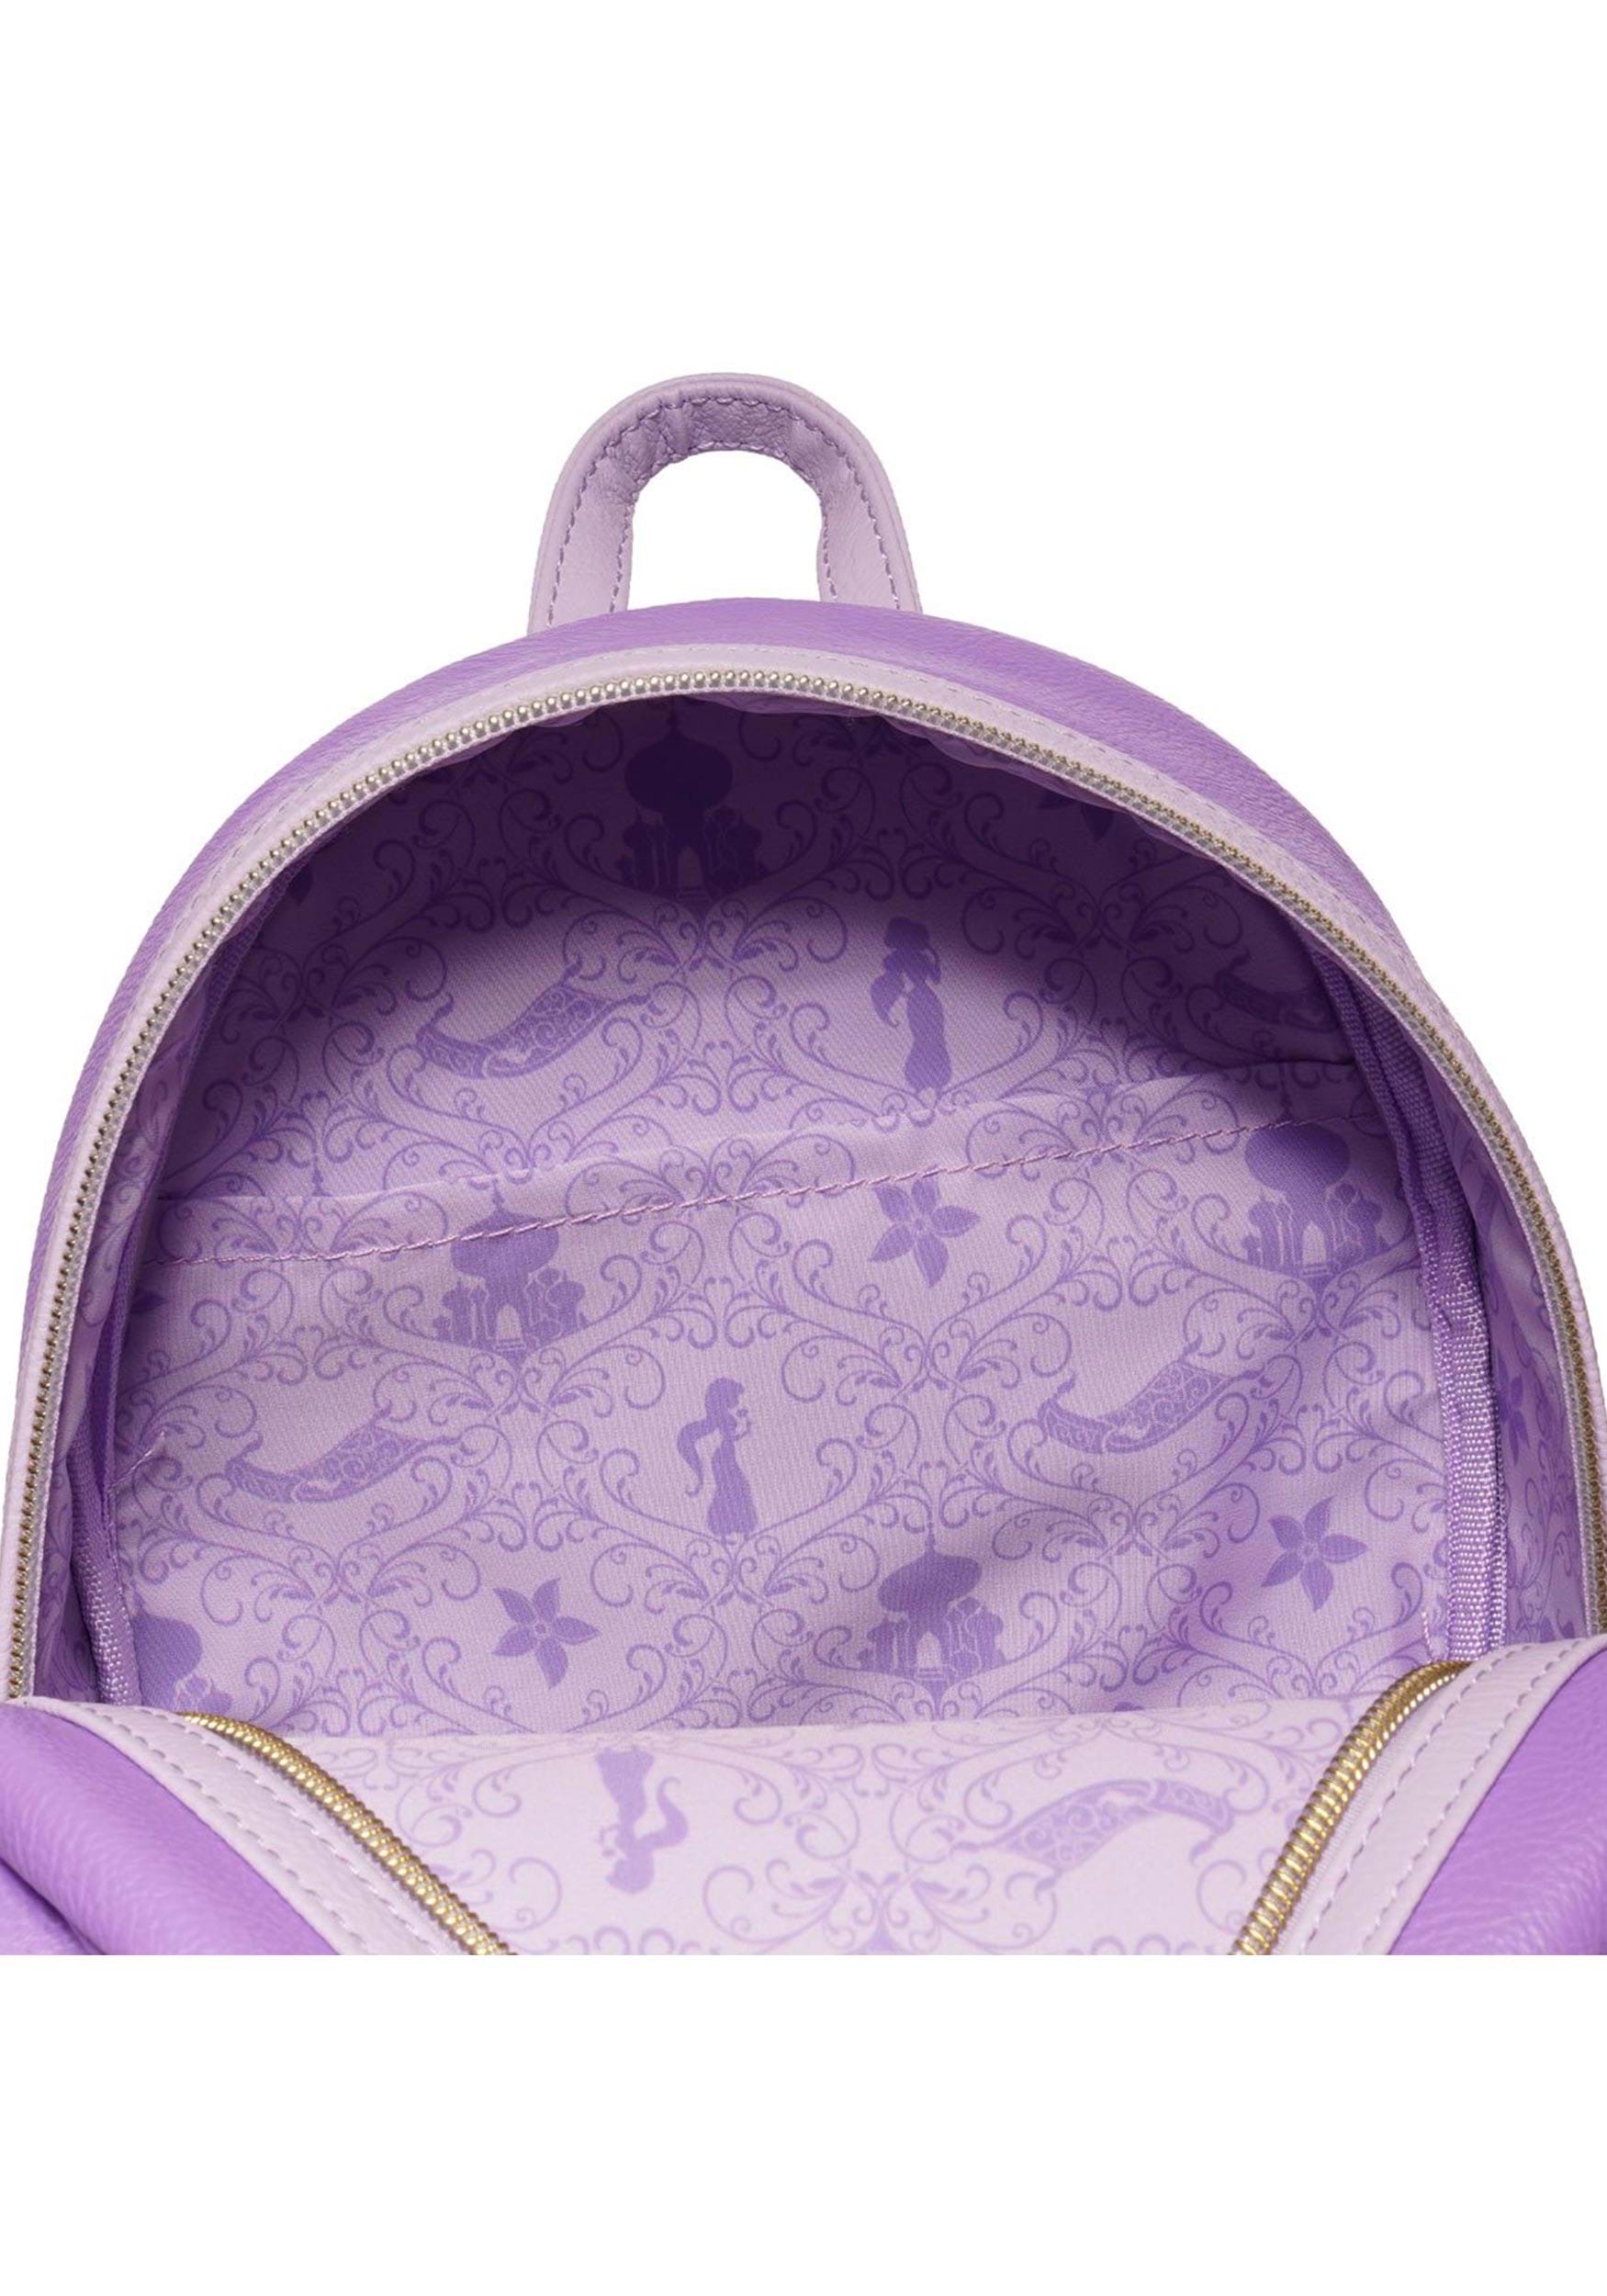 Disney Loungefly Mini Backpack - Aladdin - Princess Jasmine